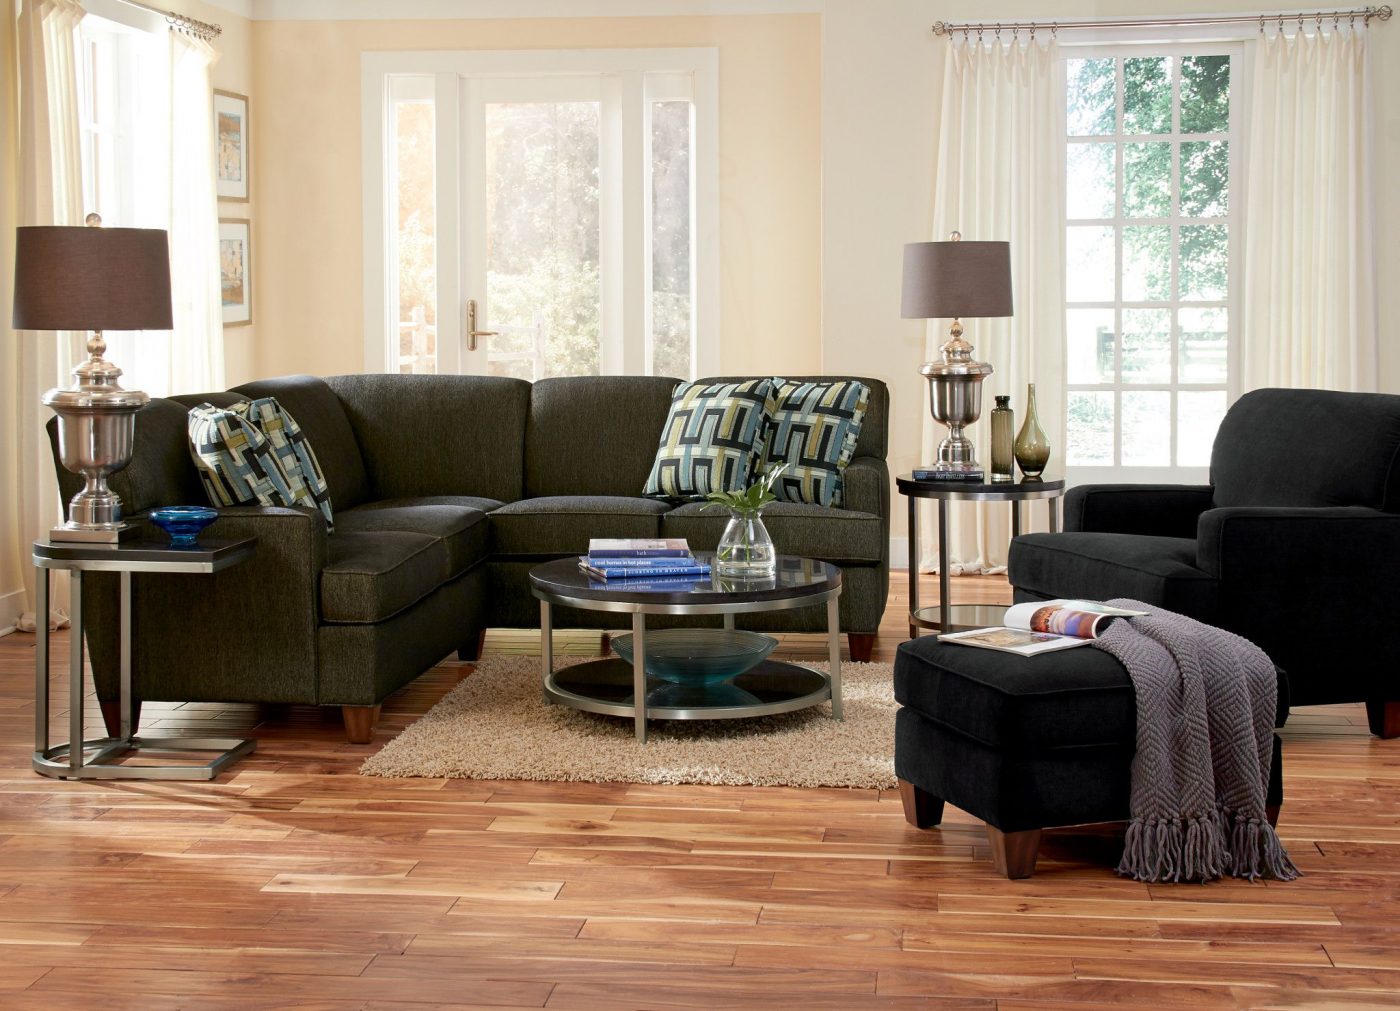 Flexsteel living room sofa, chair, and ottoman.